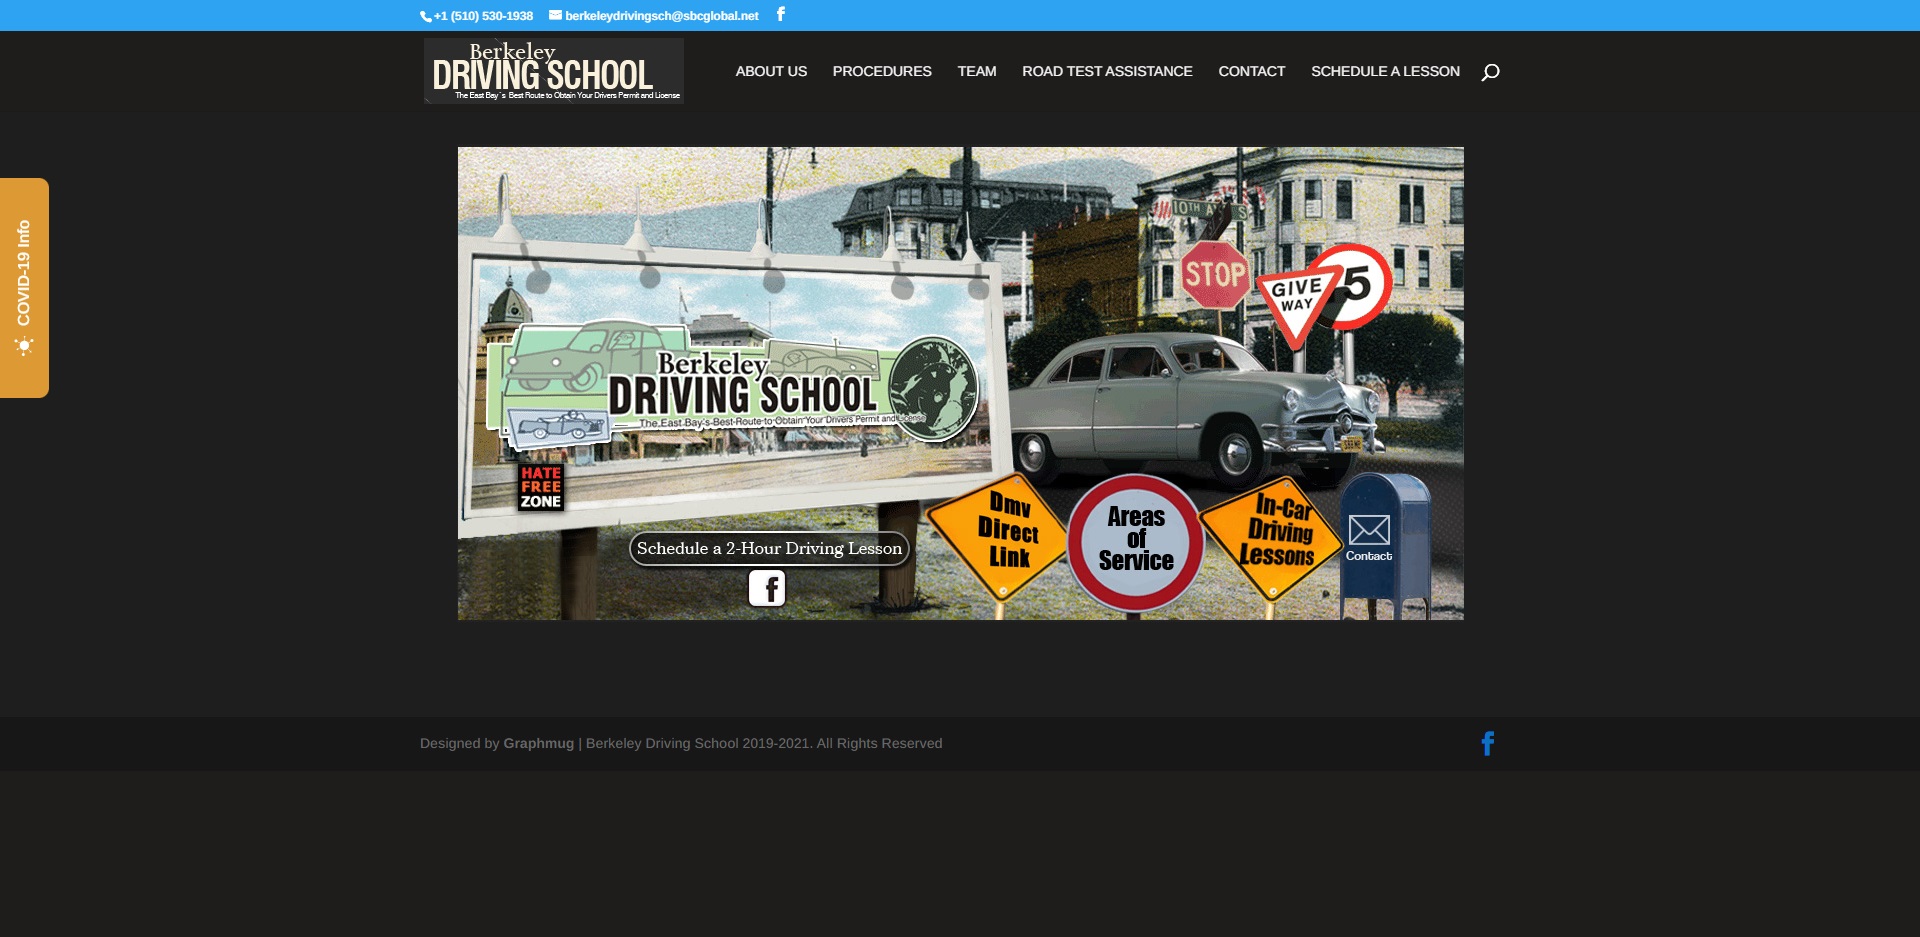 The Best Driving Schools in Oakland, CA